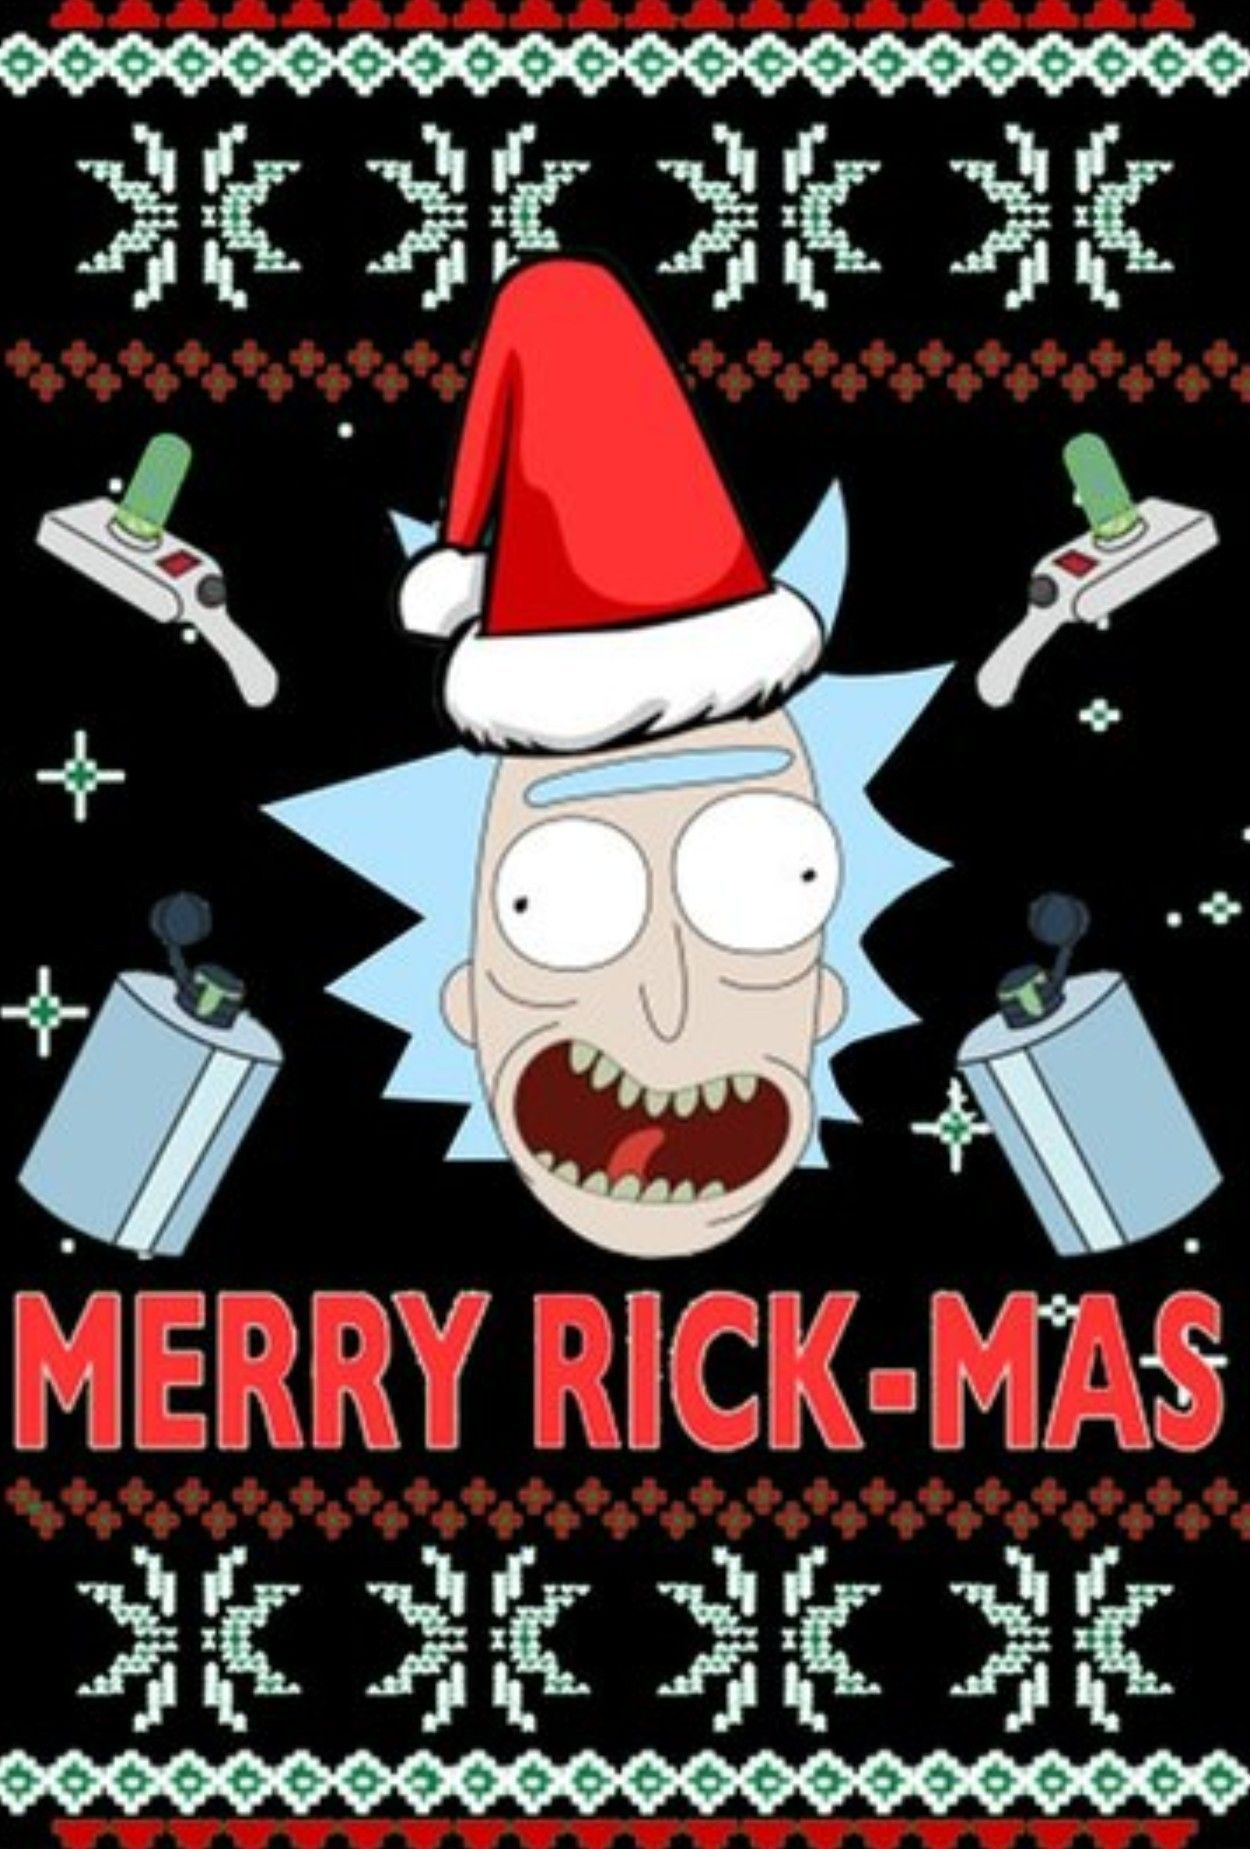 Rick And Morty X Merry Rick Mas. Rick And Morty, Rick, Morty